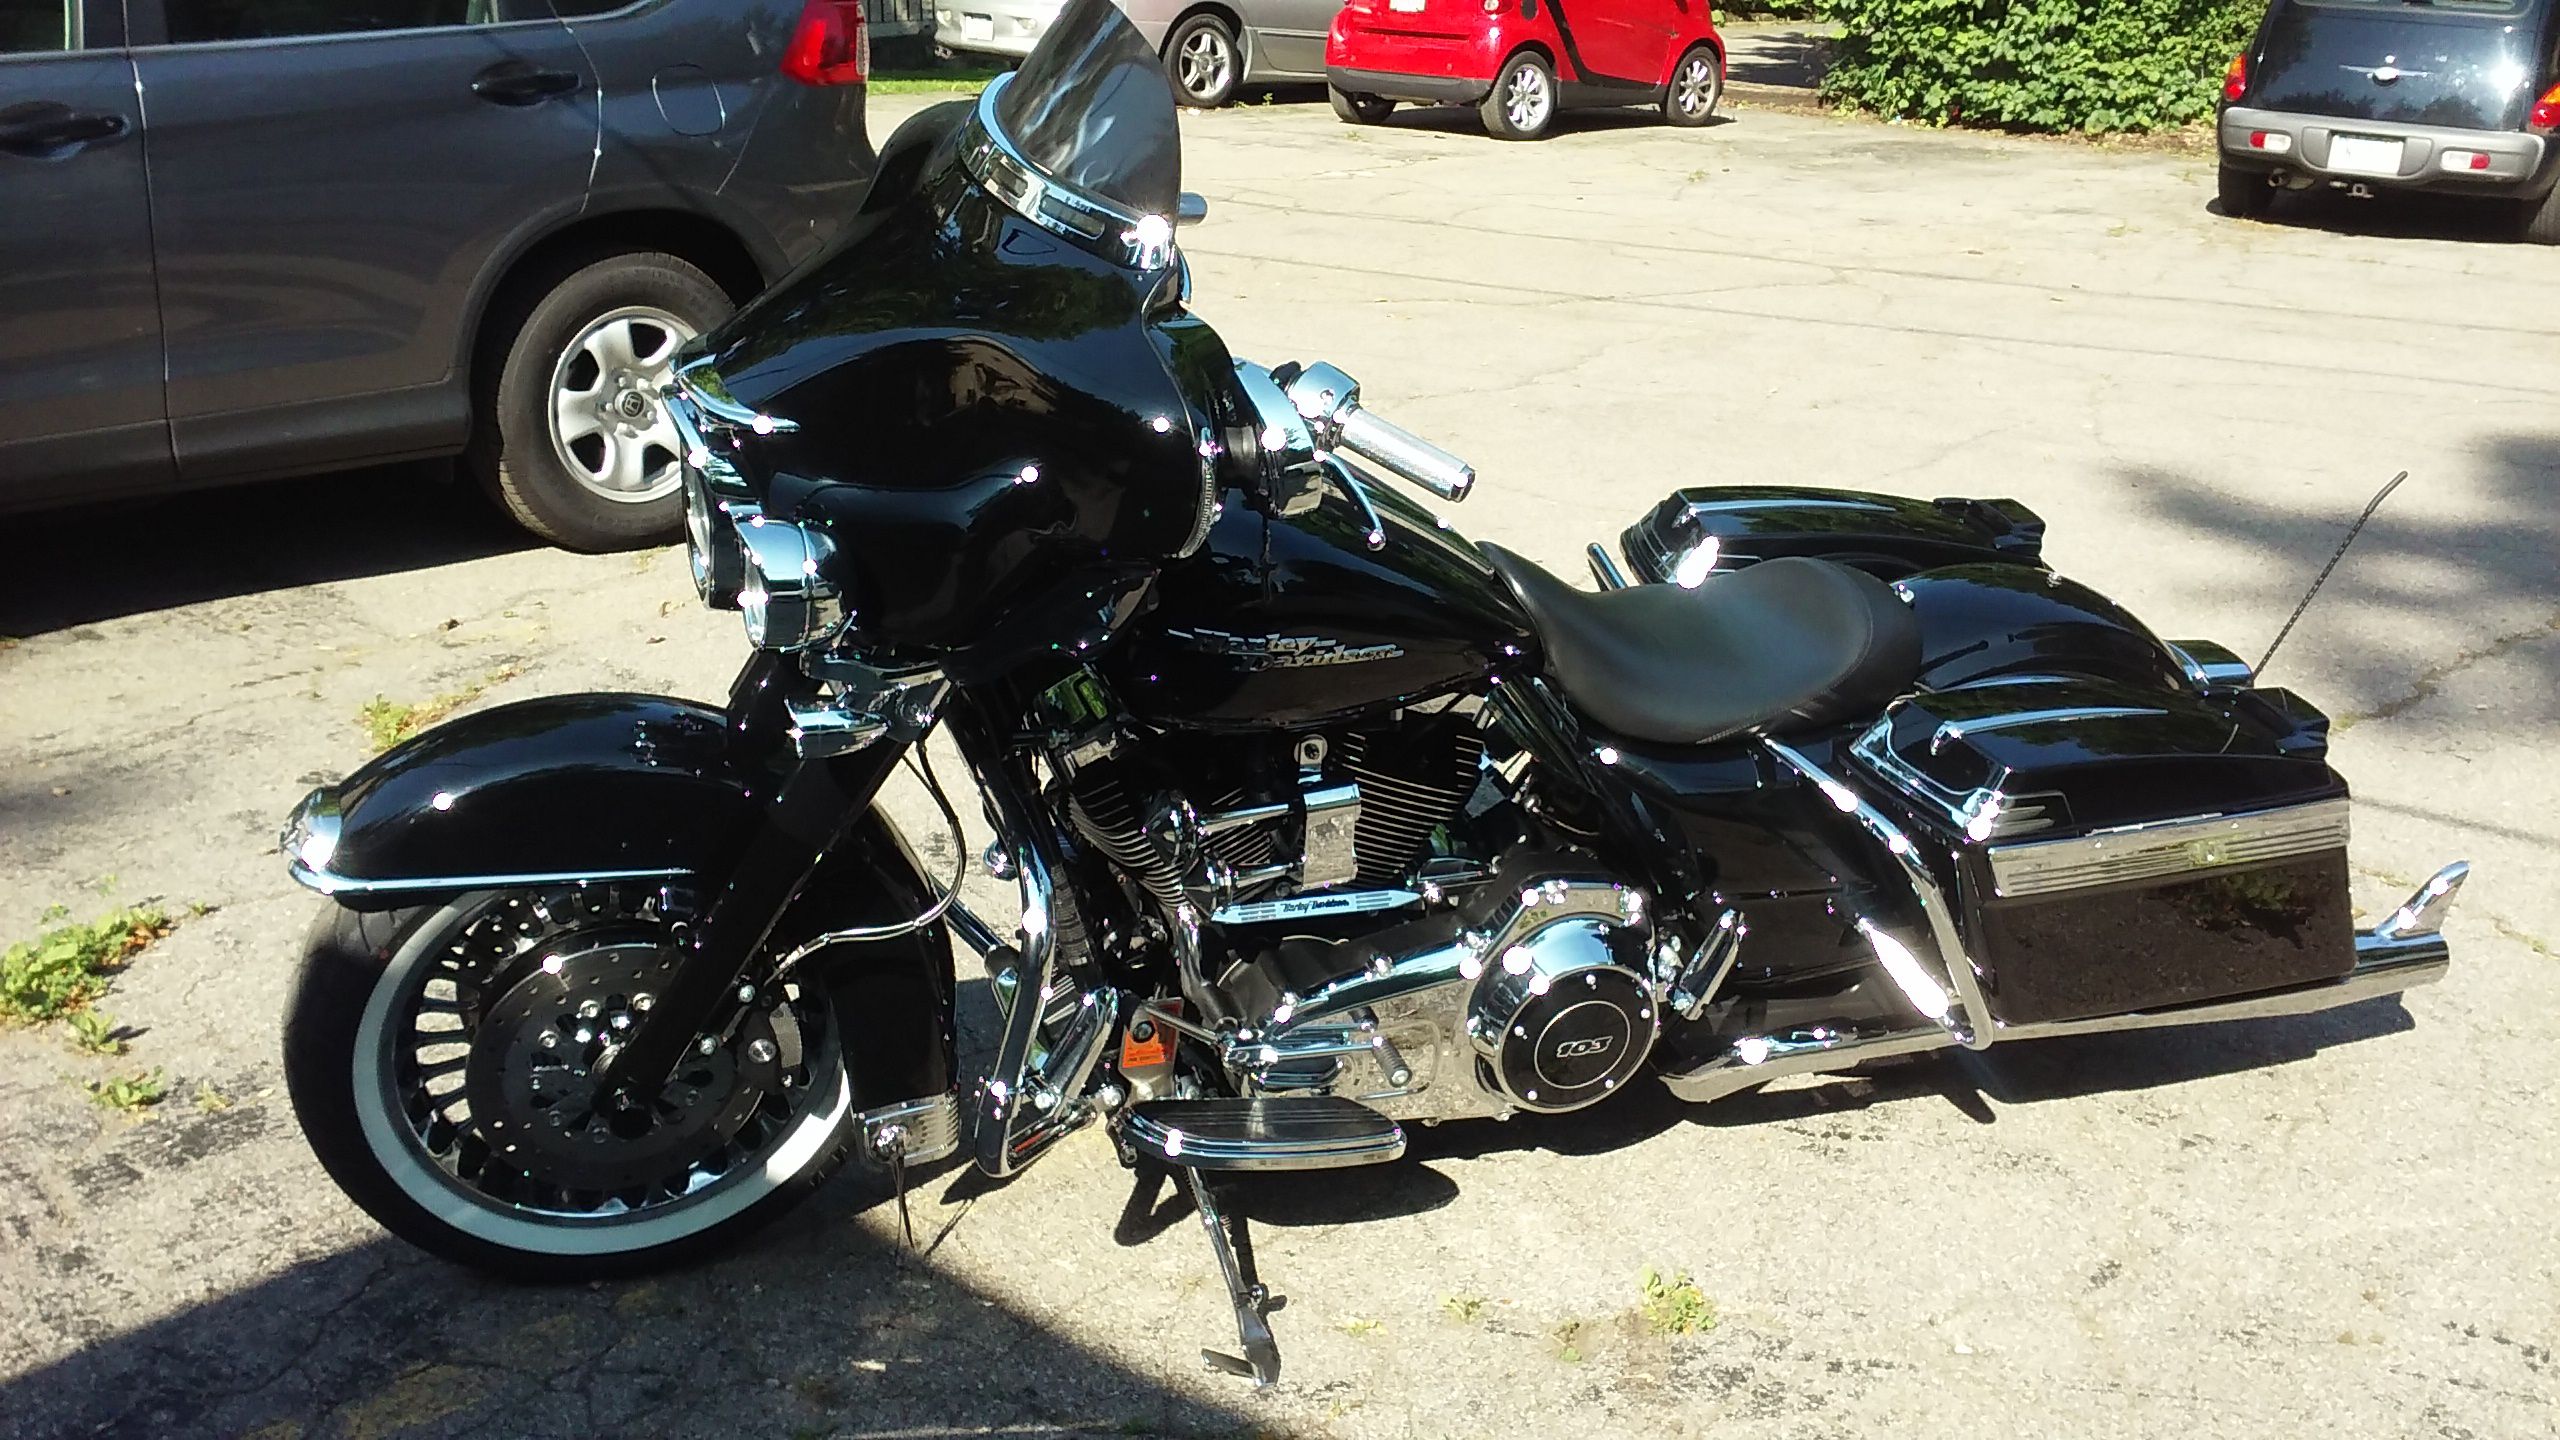 Motorcycle Harley Davidson's